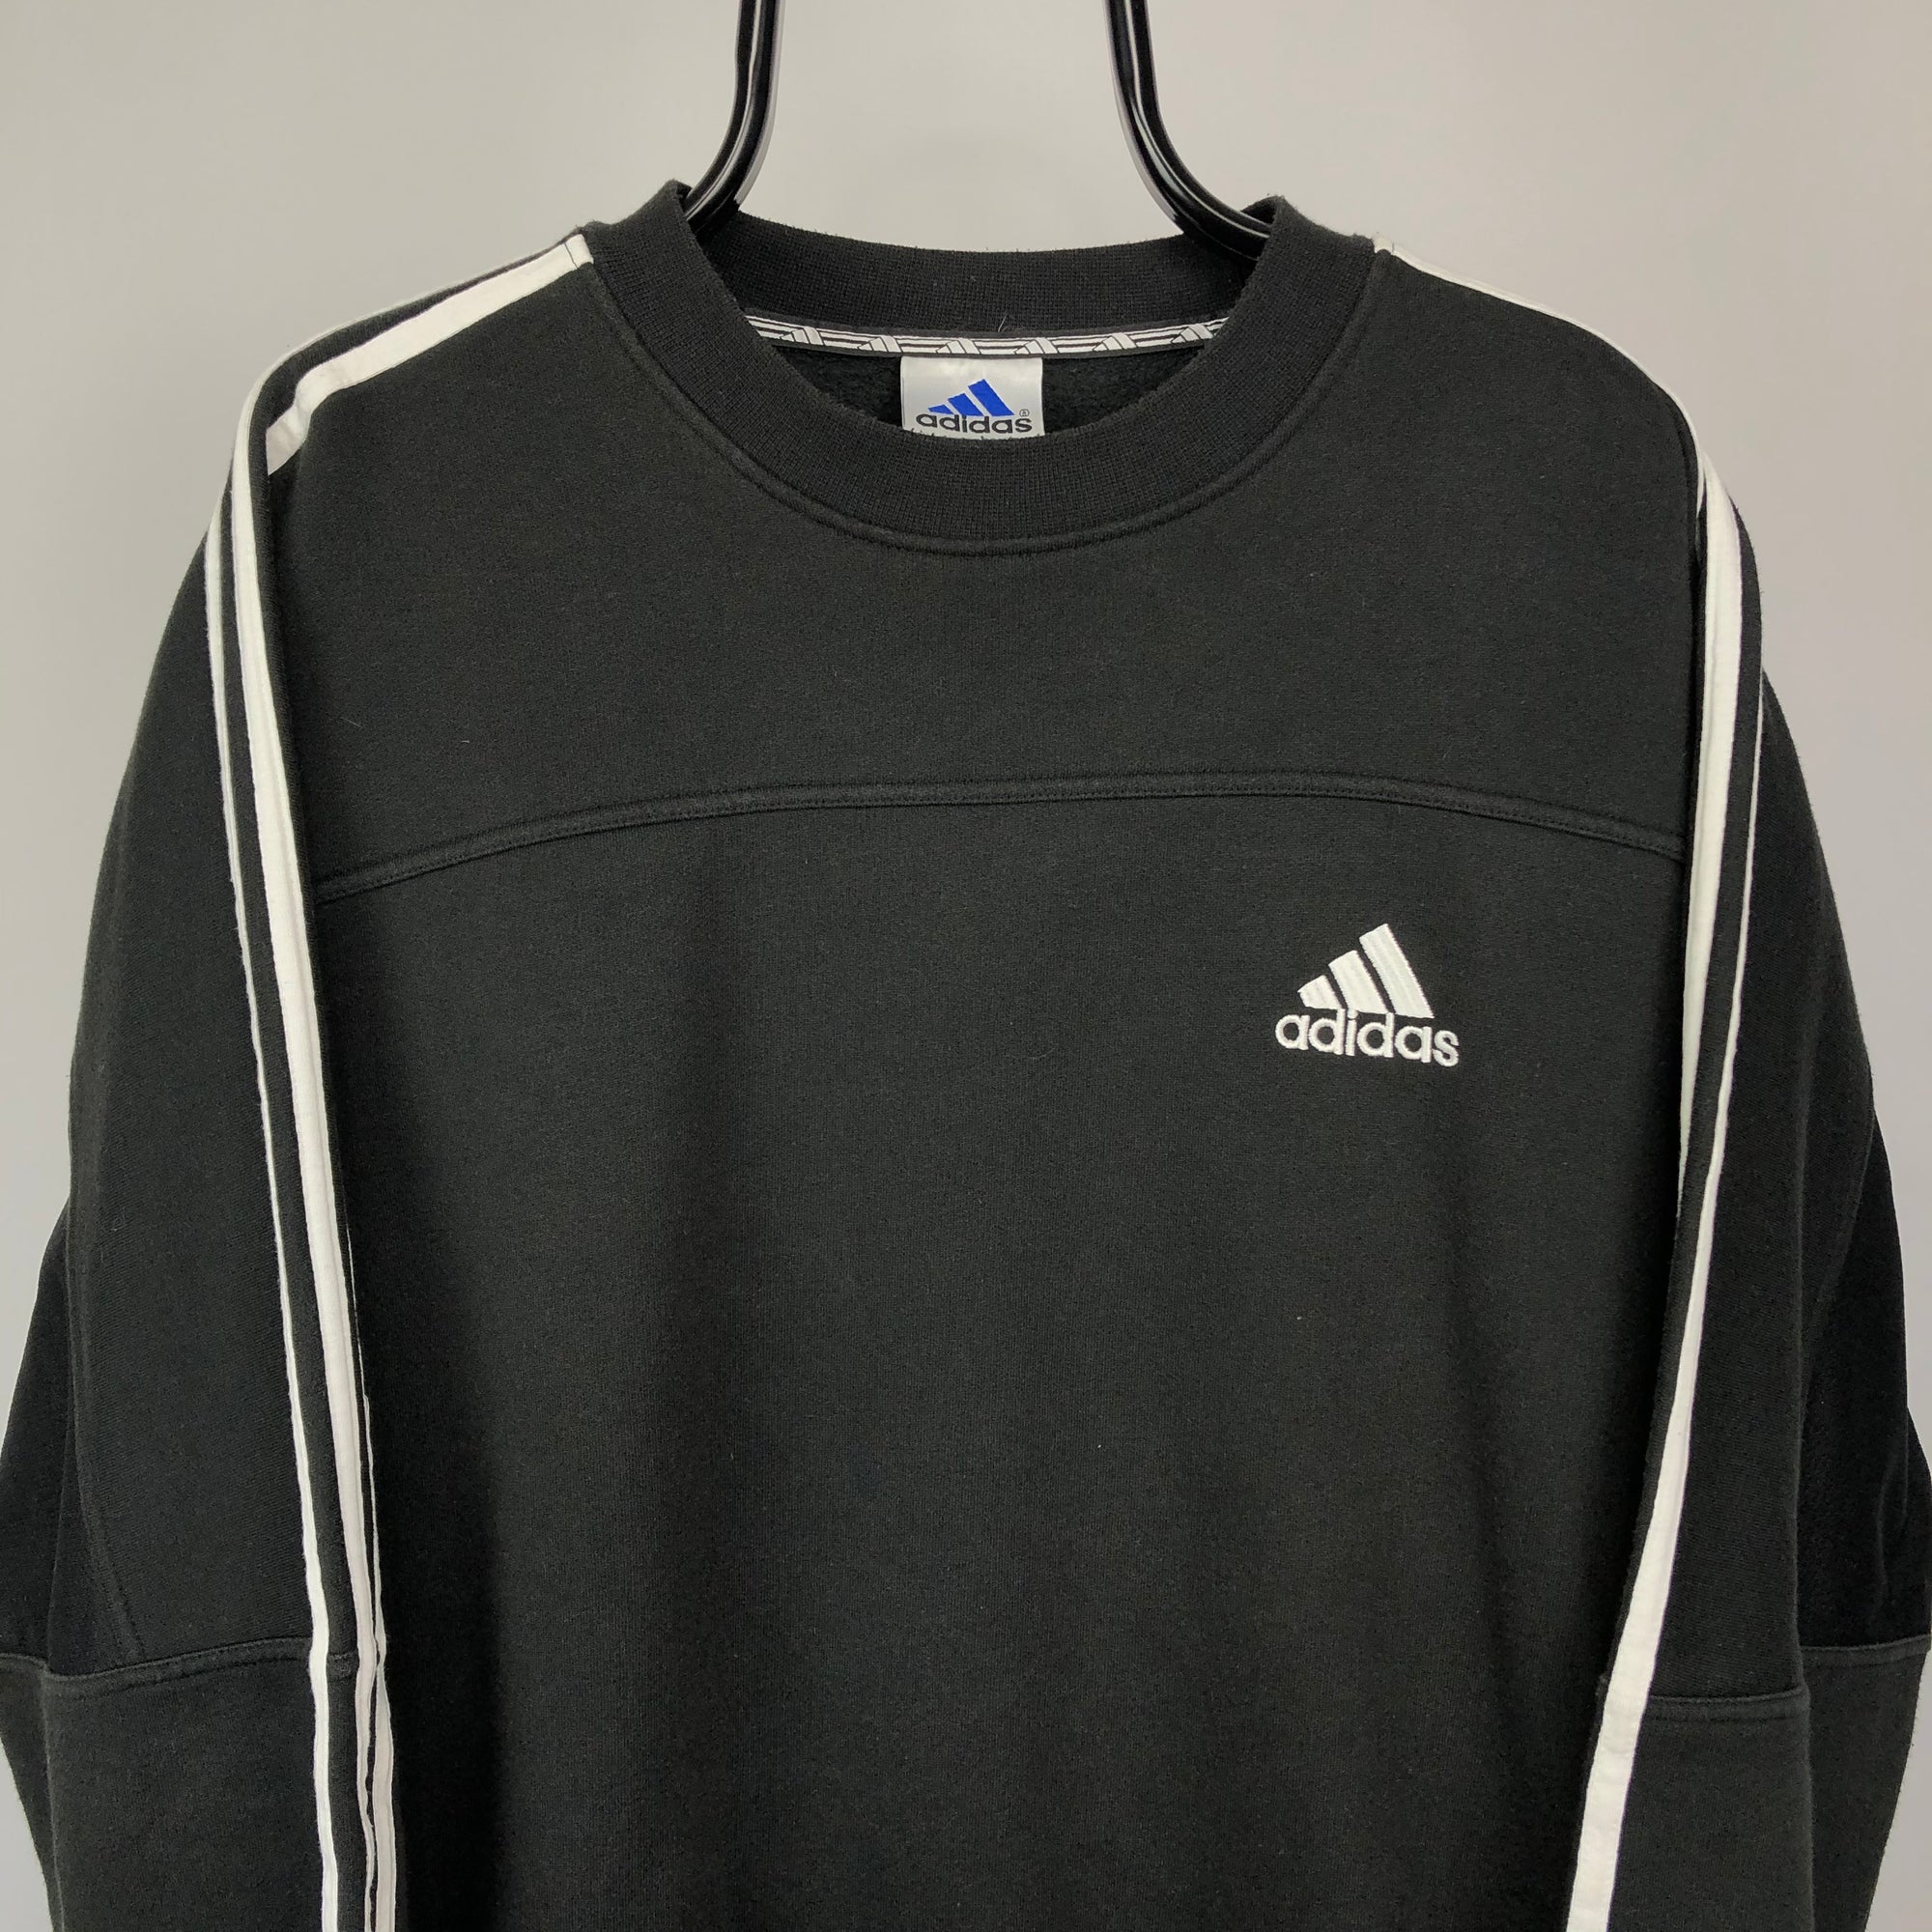 Vintage 90s Adidas Embroidered Small Logo Sweatshirt in Black/White - Men's XL/Women's XXL